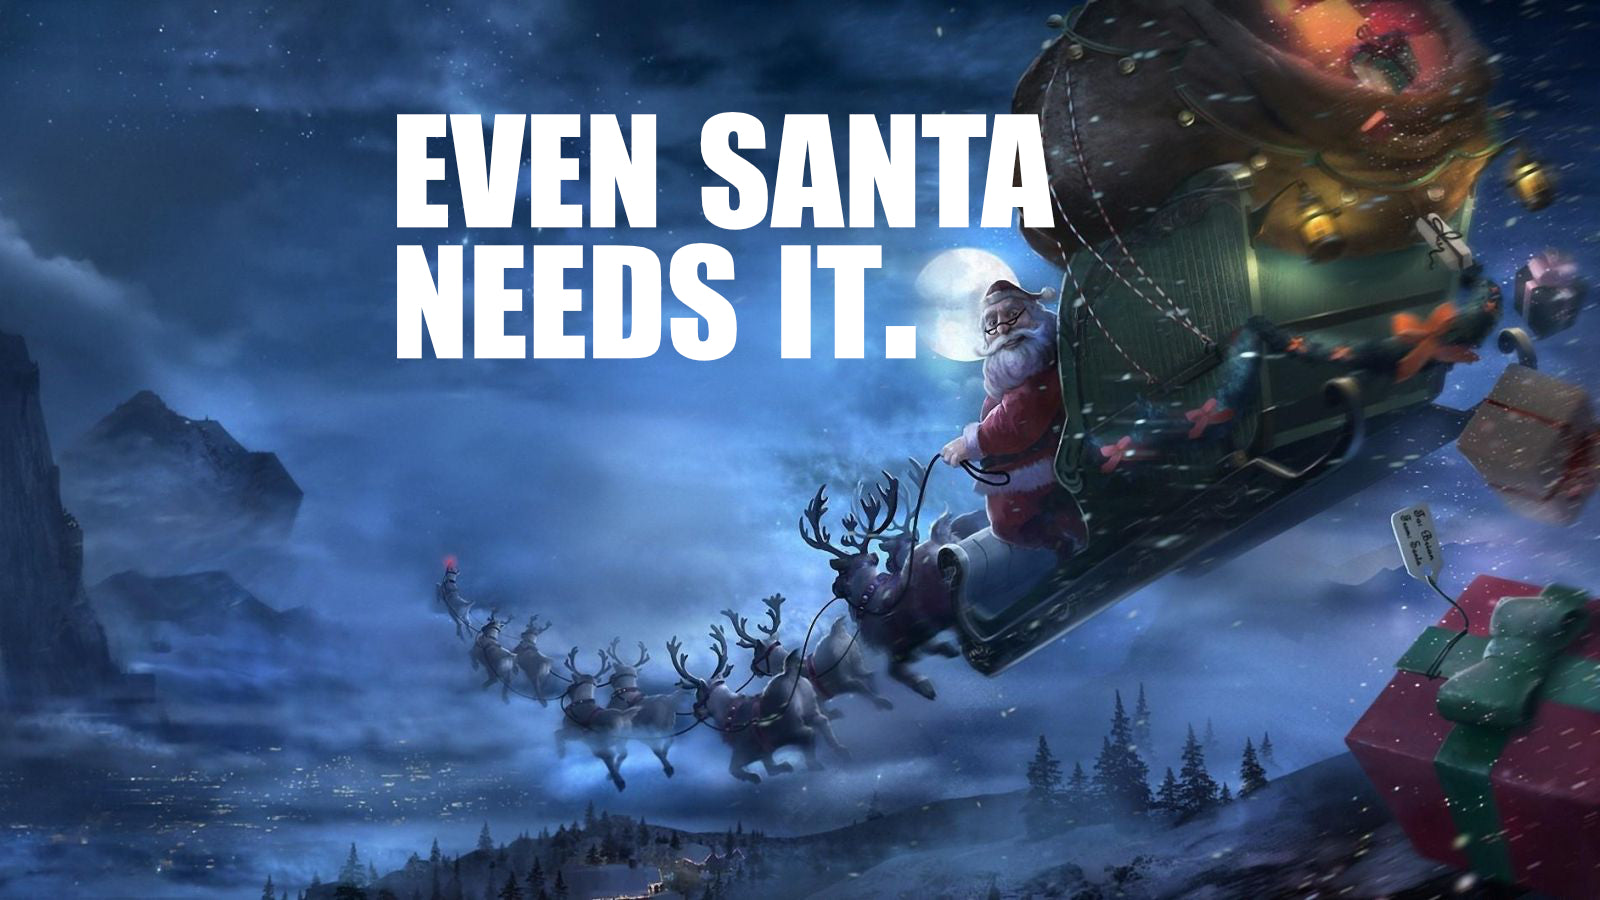 Even Santa Needs It.  Santa flying around at night